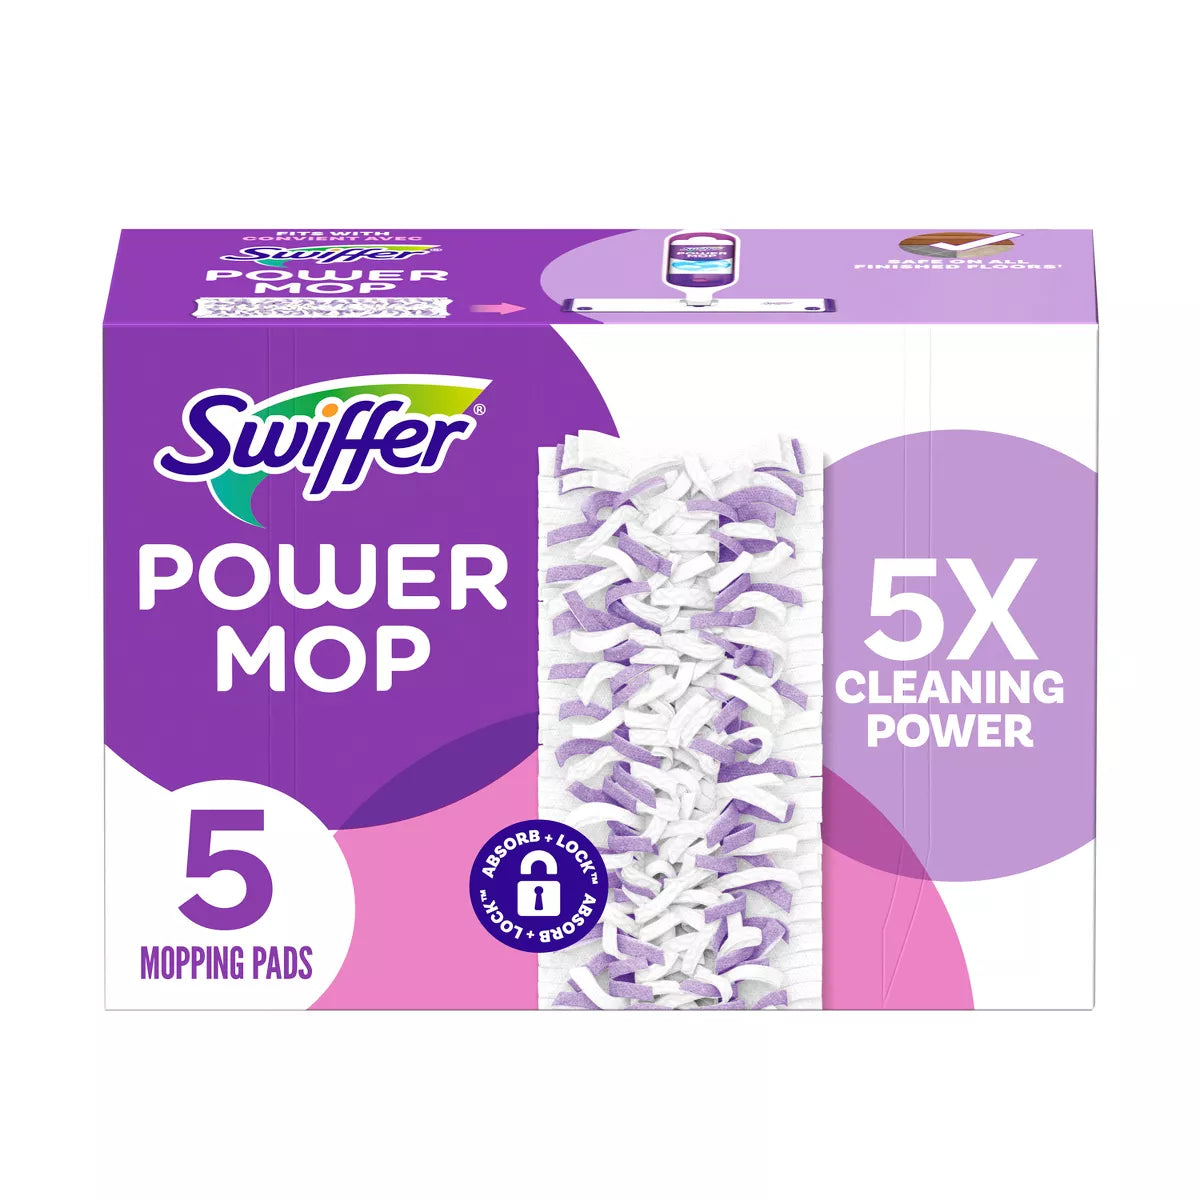 Swiffer Power Mop Refills – Pack of 5